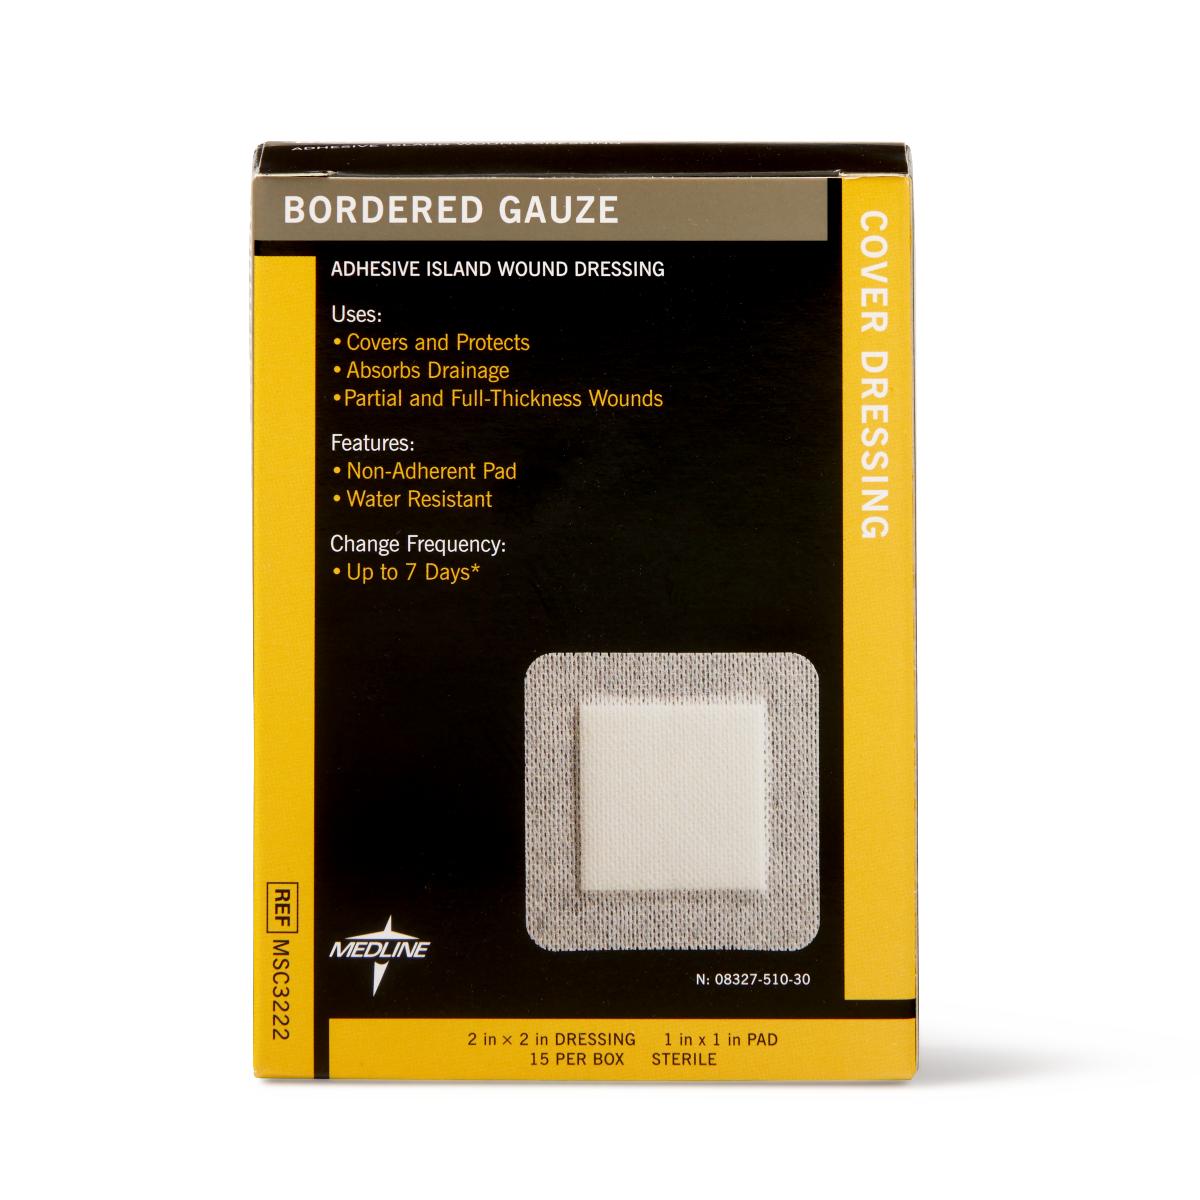 Sterile Bordered Gauze Adhesive Island Wound Dressing- Various sizes (box of 15)